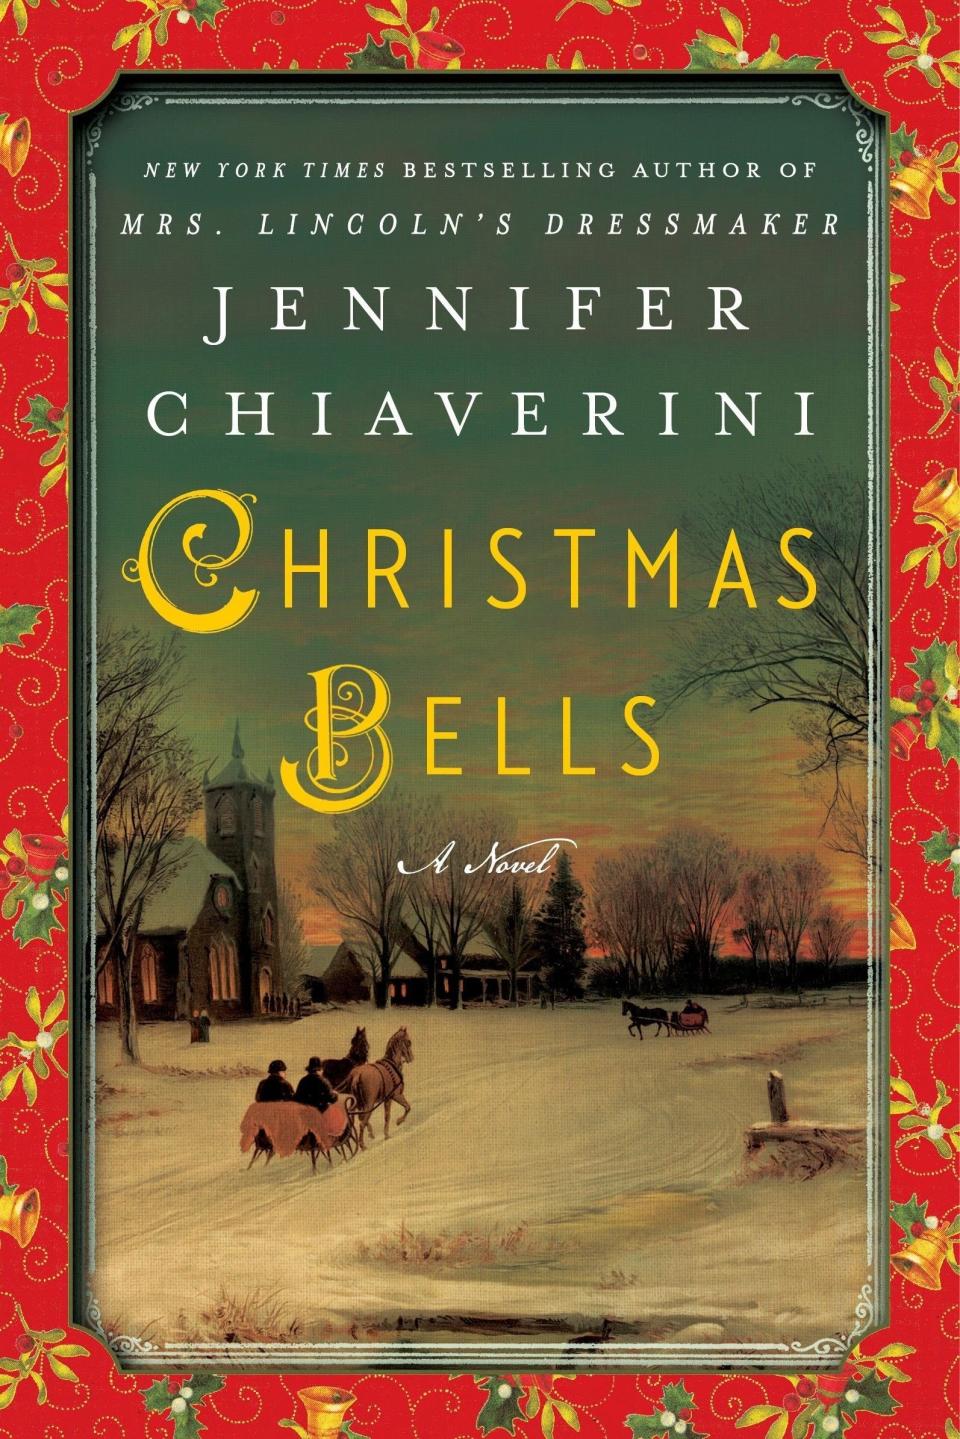 Christmas Bells by Jennifer Chiaverini